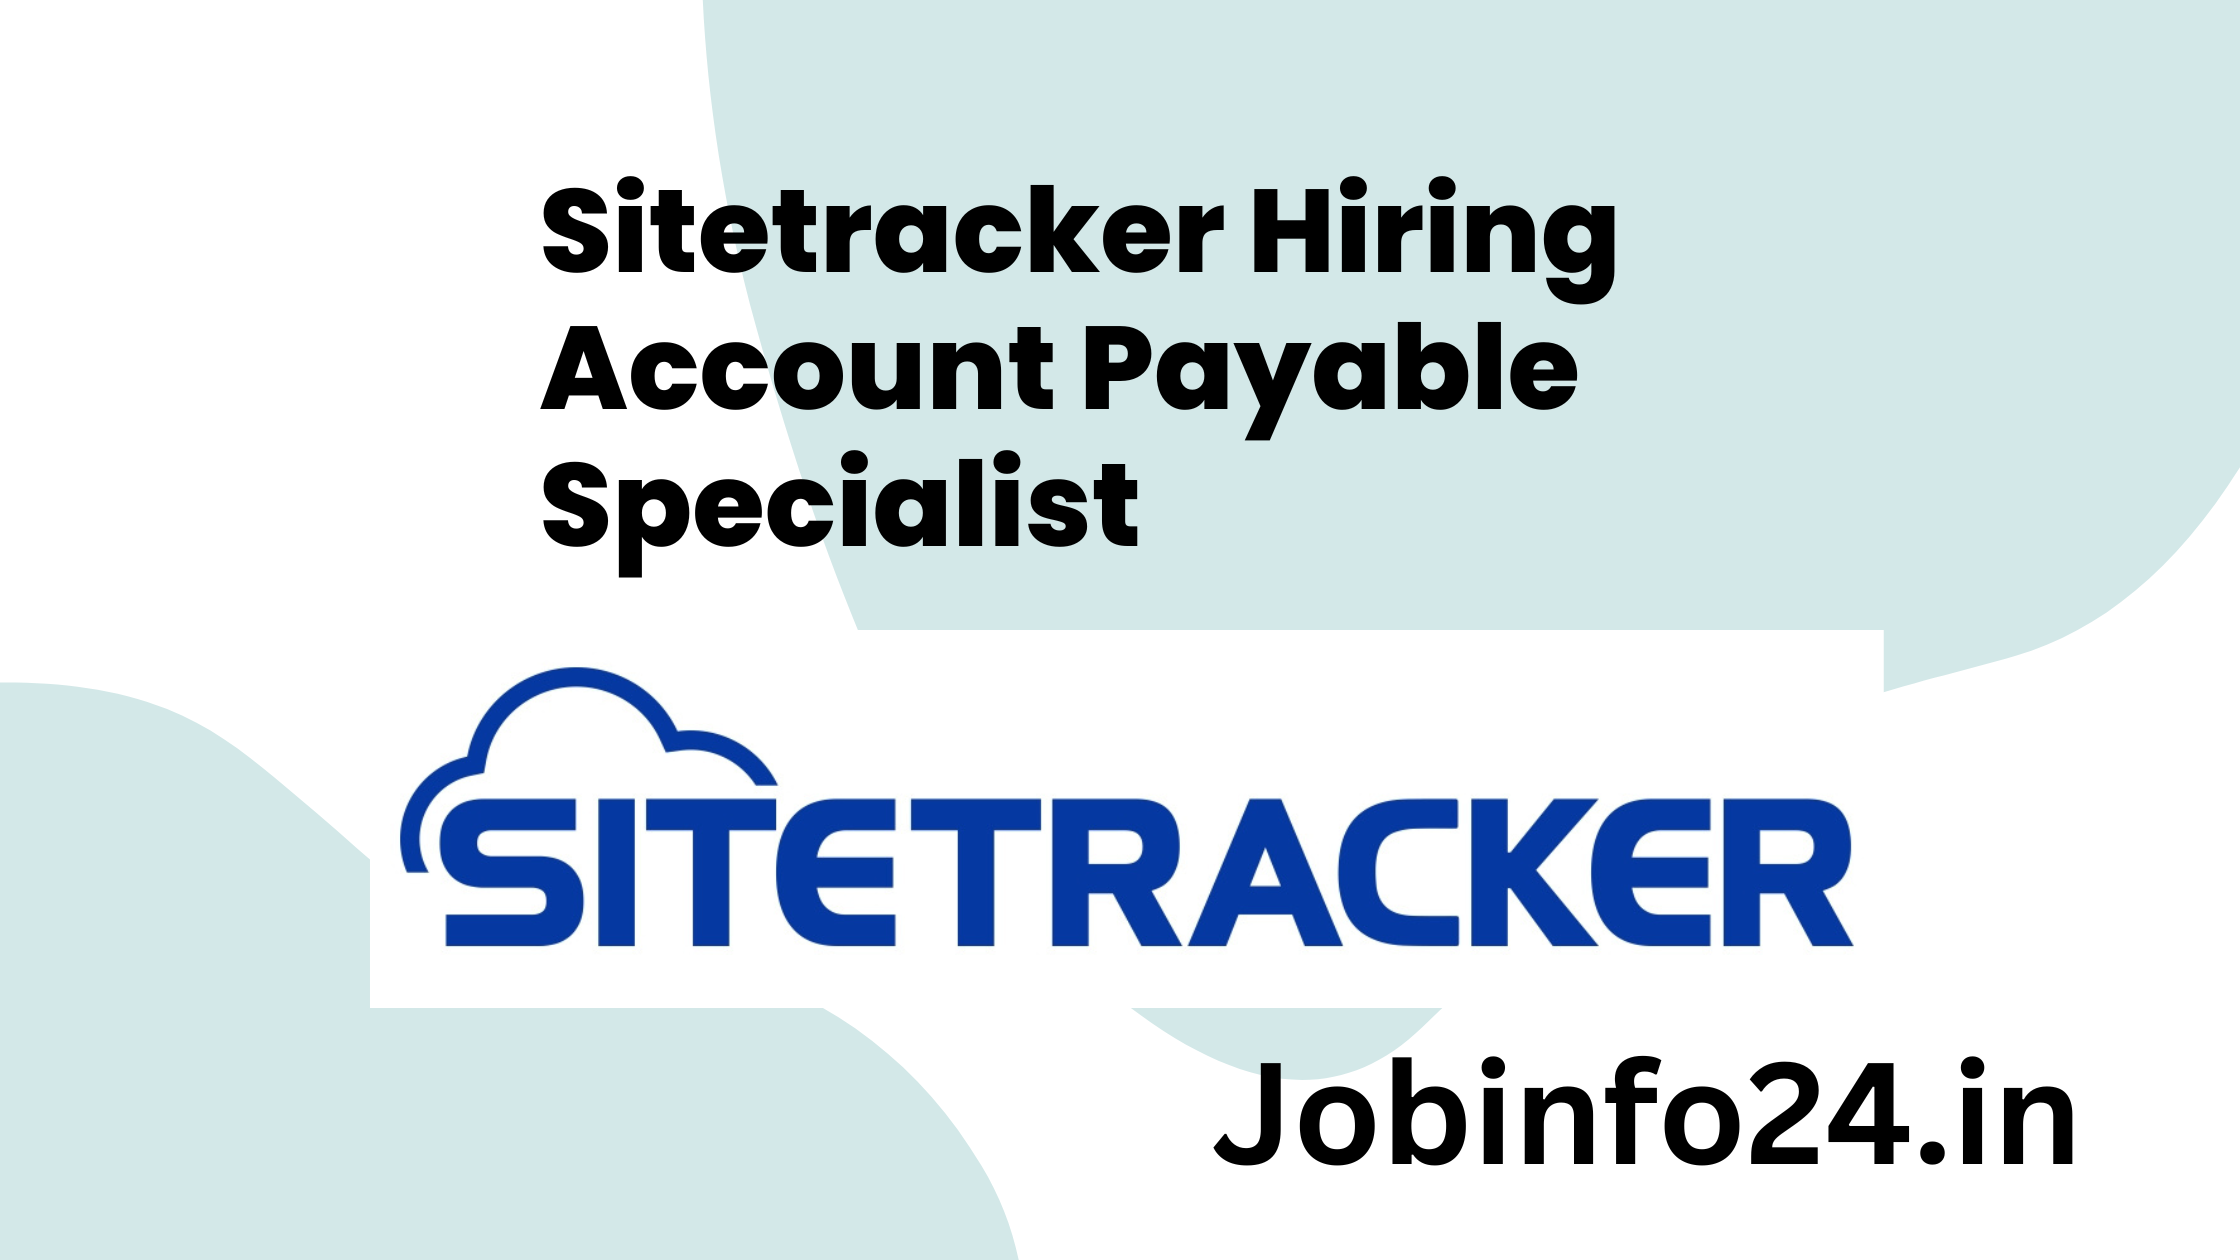 Sitetracker Hiring Account Payable Specialist